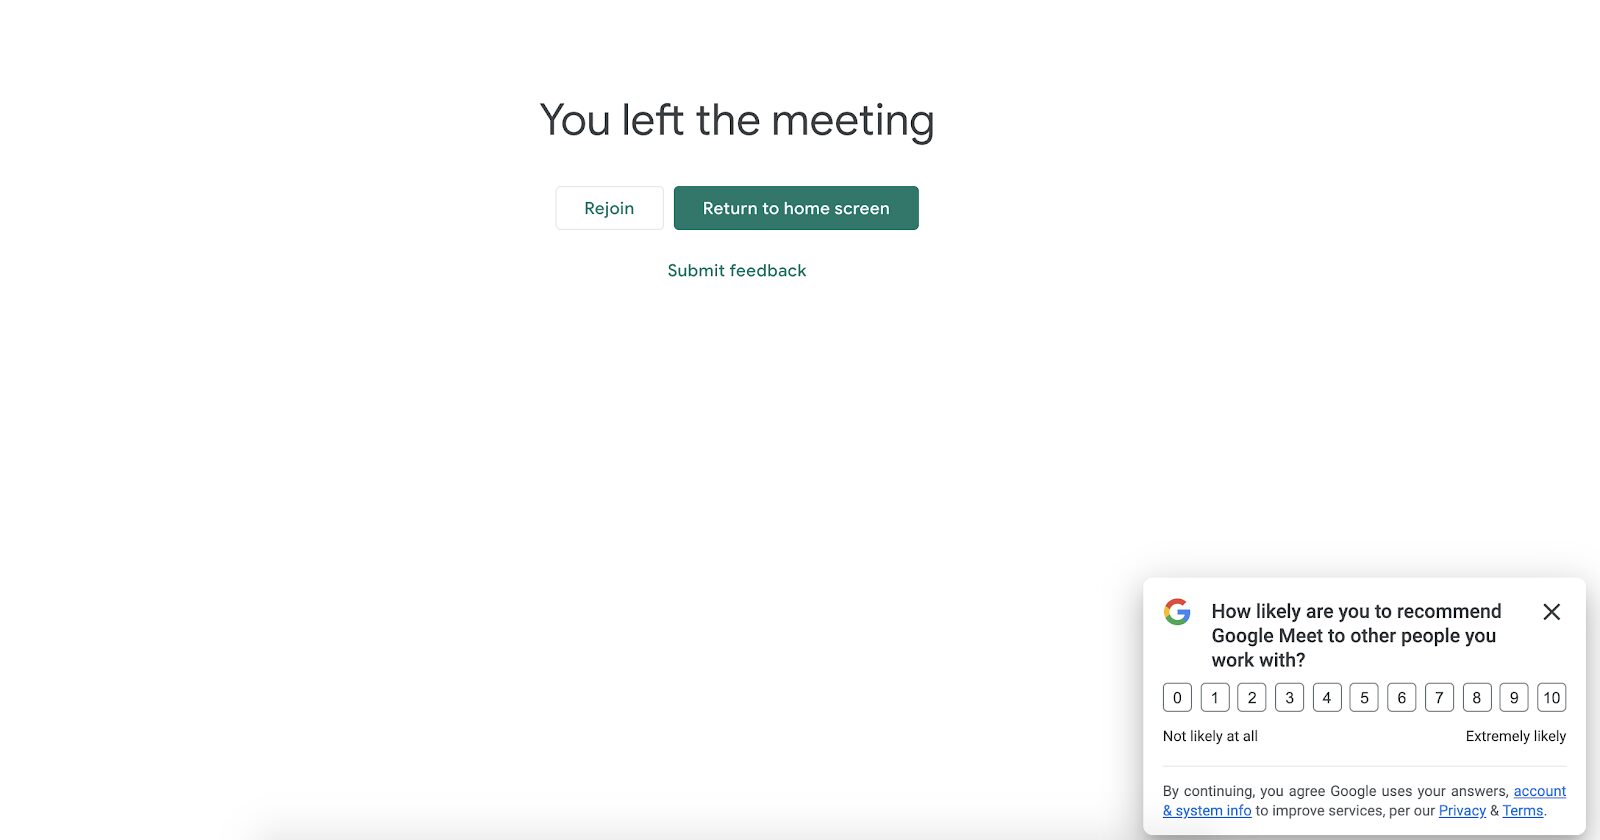 Survei NPS Google Meet muncul setelah pengunjung mengakhiri panggilan, sehingga mereka dapat segera memberikan masukan tentang pengalamannya. Ini adalah taktik yang bagus untuk mendorong pengguna berbagi masukan selagi masih segar.